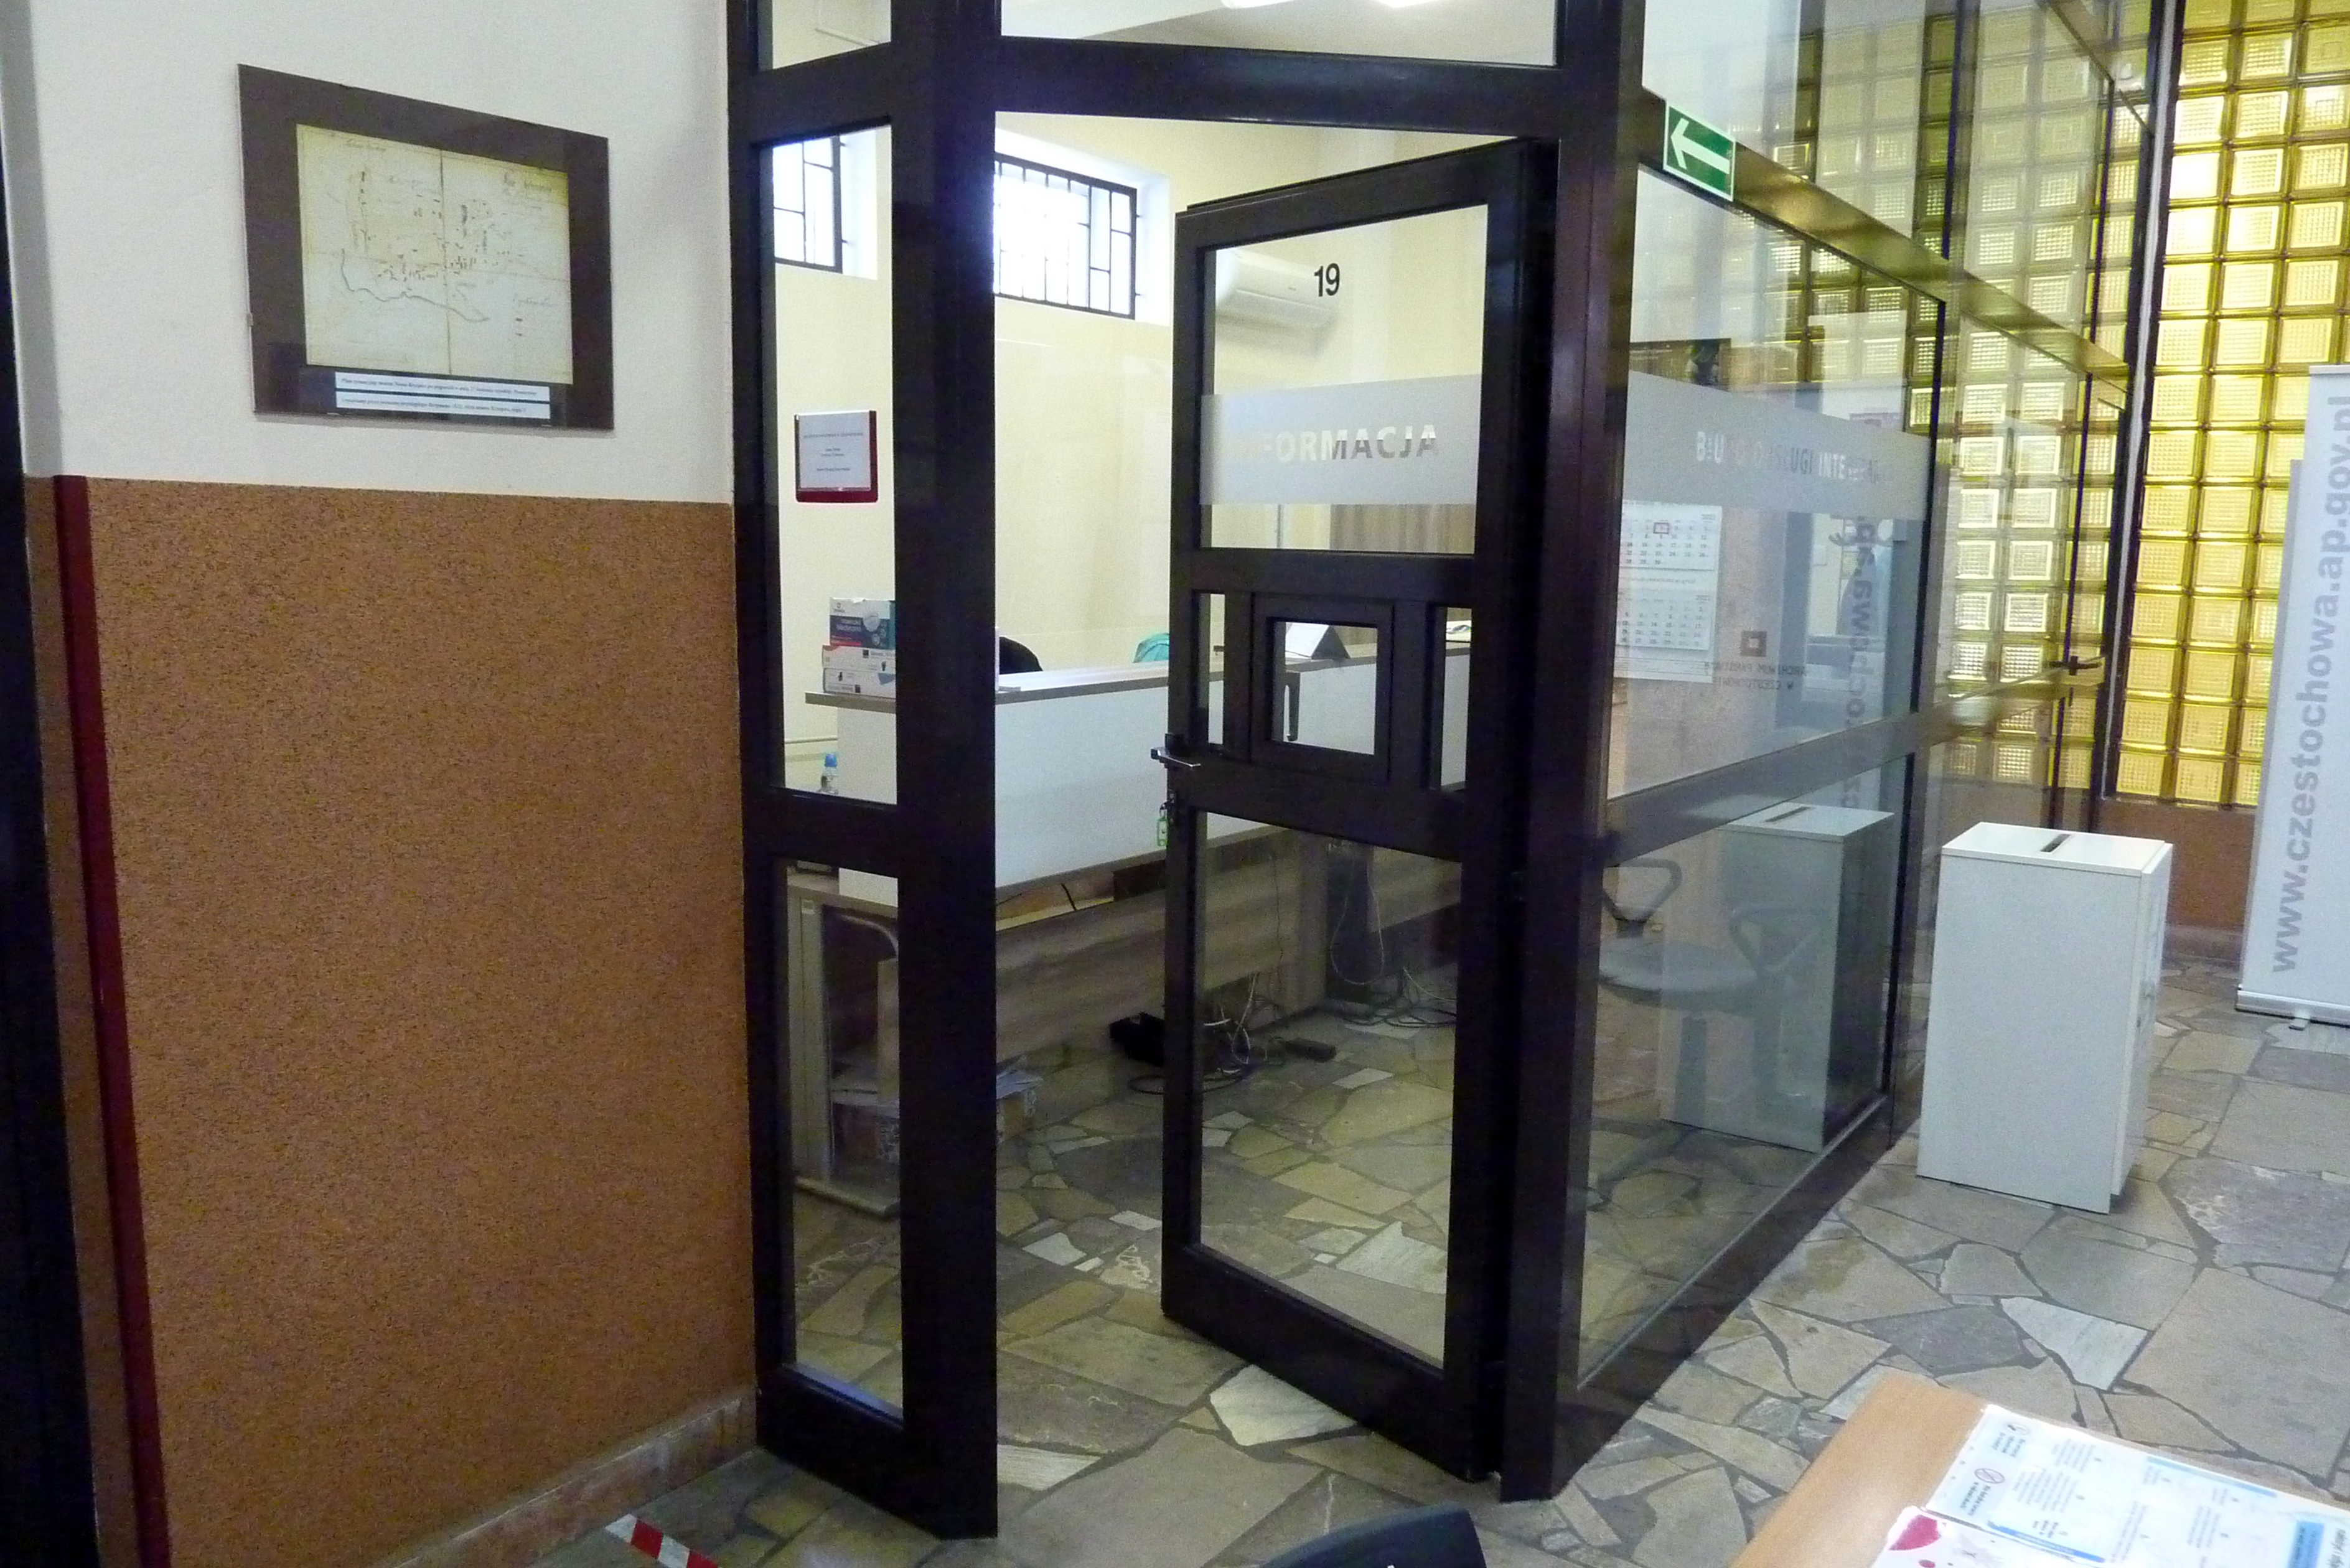 Drzwi do Biura Obsługi Interesanta.